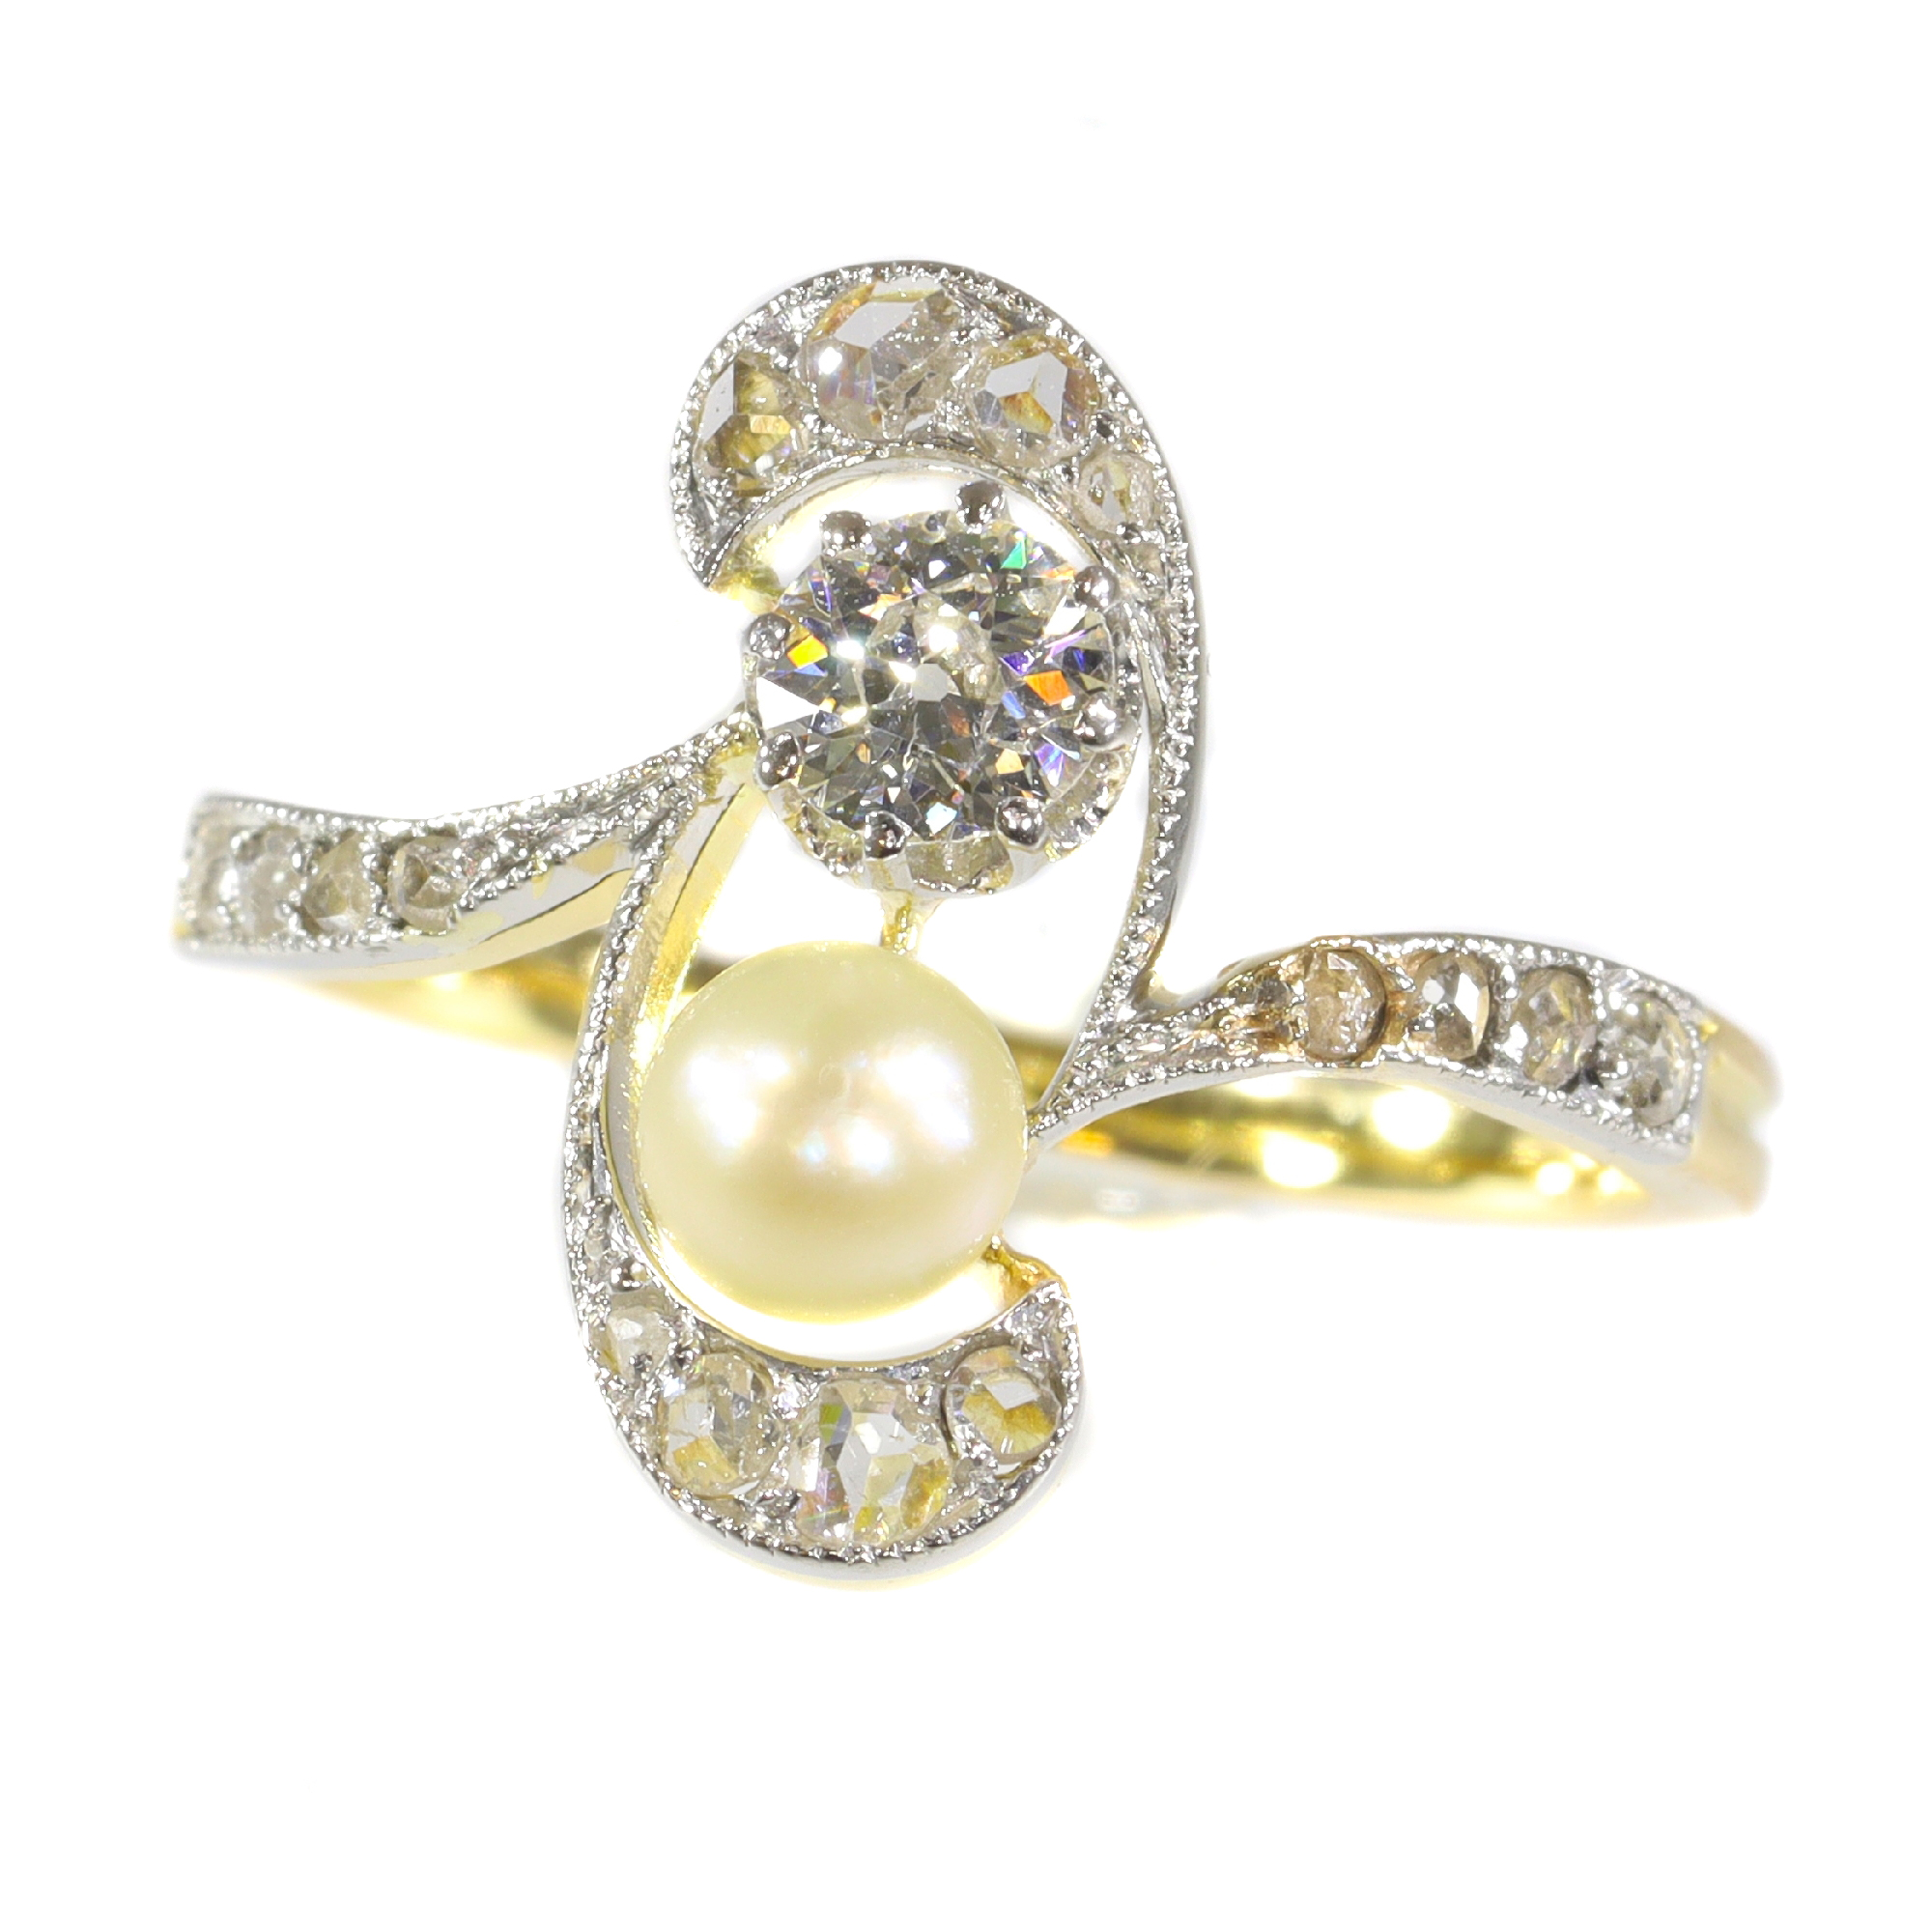 Original Art Nouveau diamond and pearl engagement ring